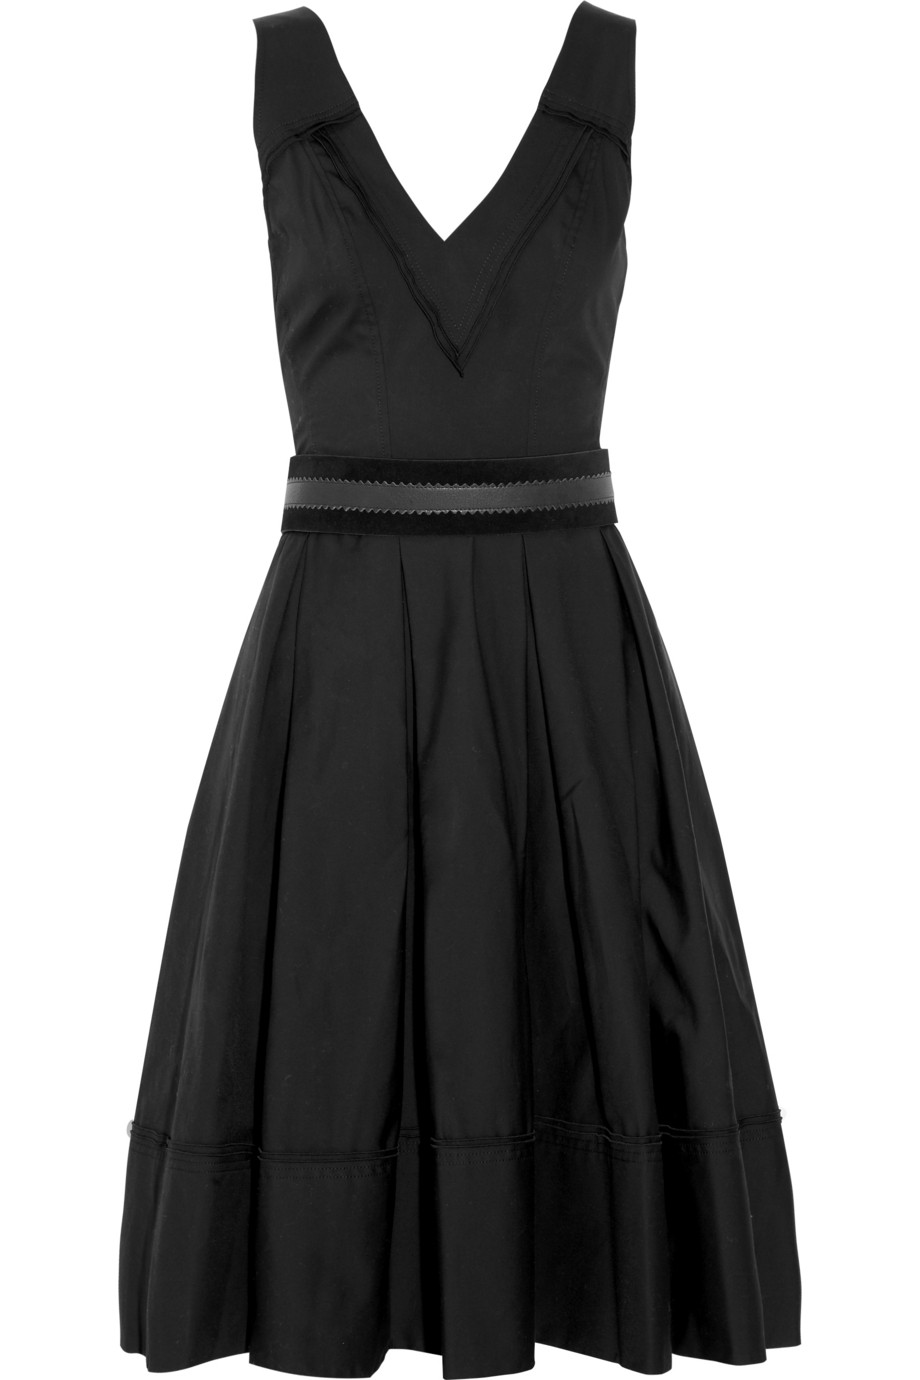 Donna Karan Belted Cotton-blend Dress in Black - Lyst